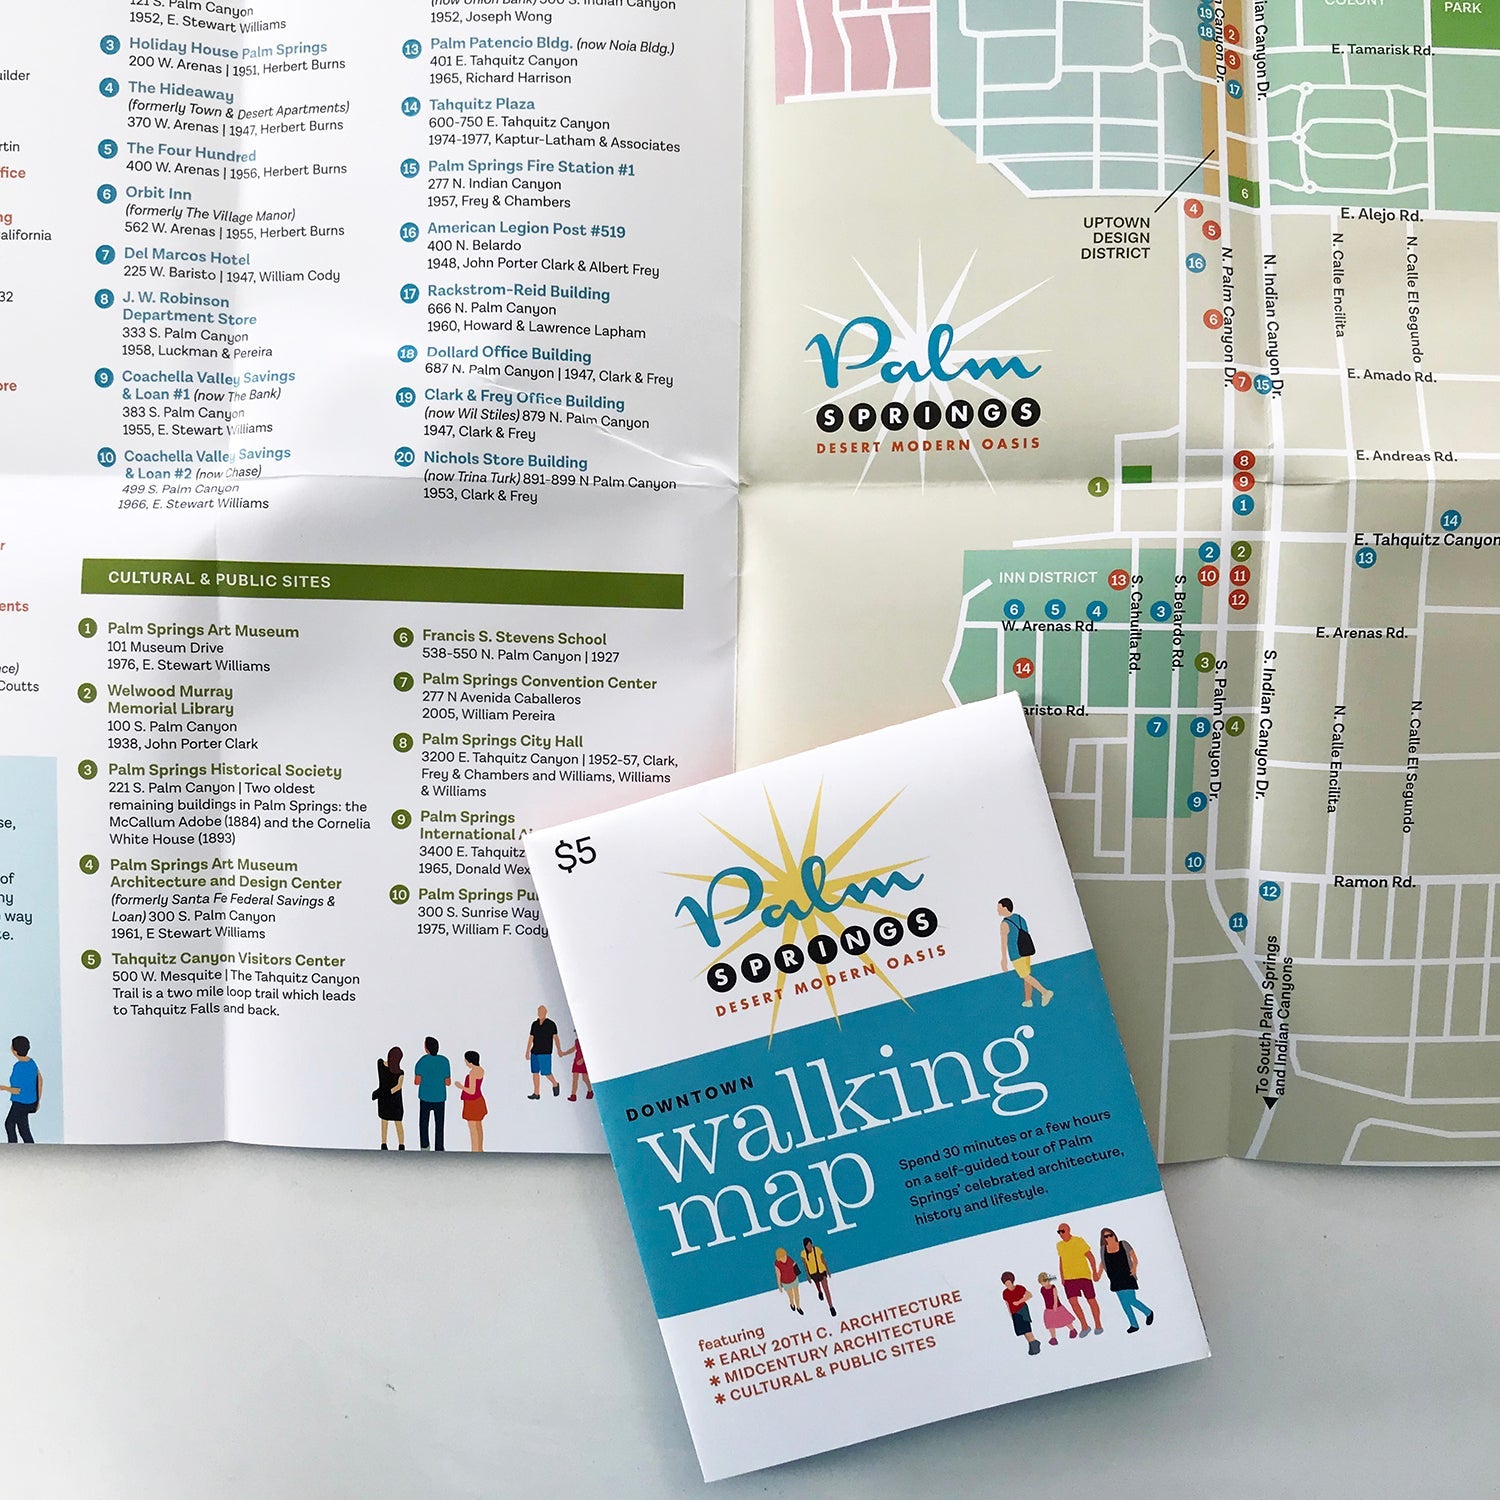 Palm Springs Downtown Walking Map - Destination PSP